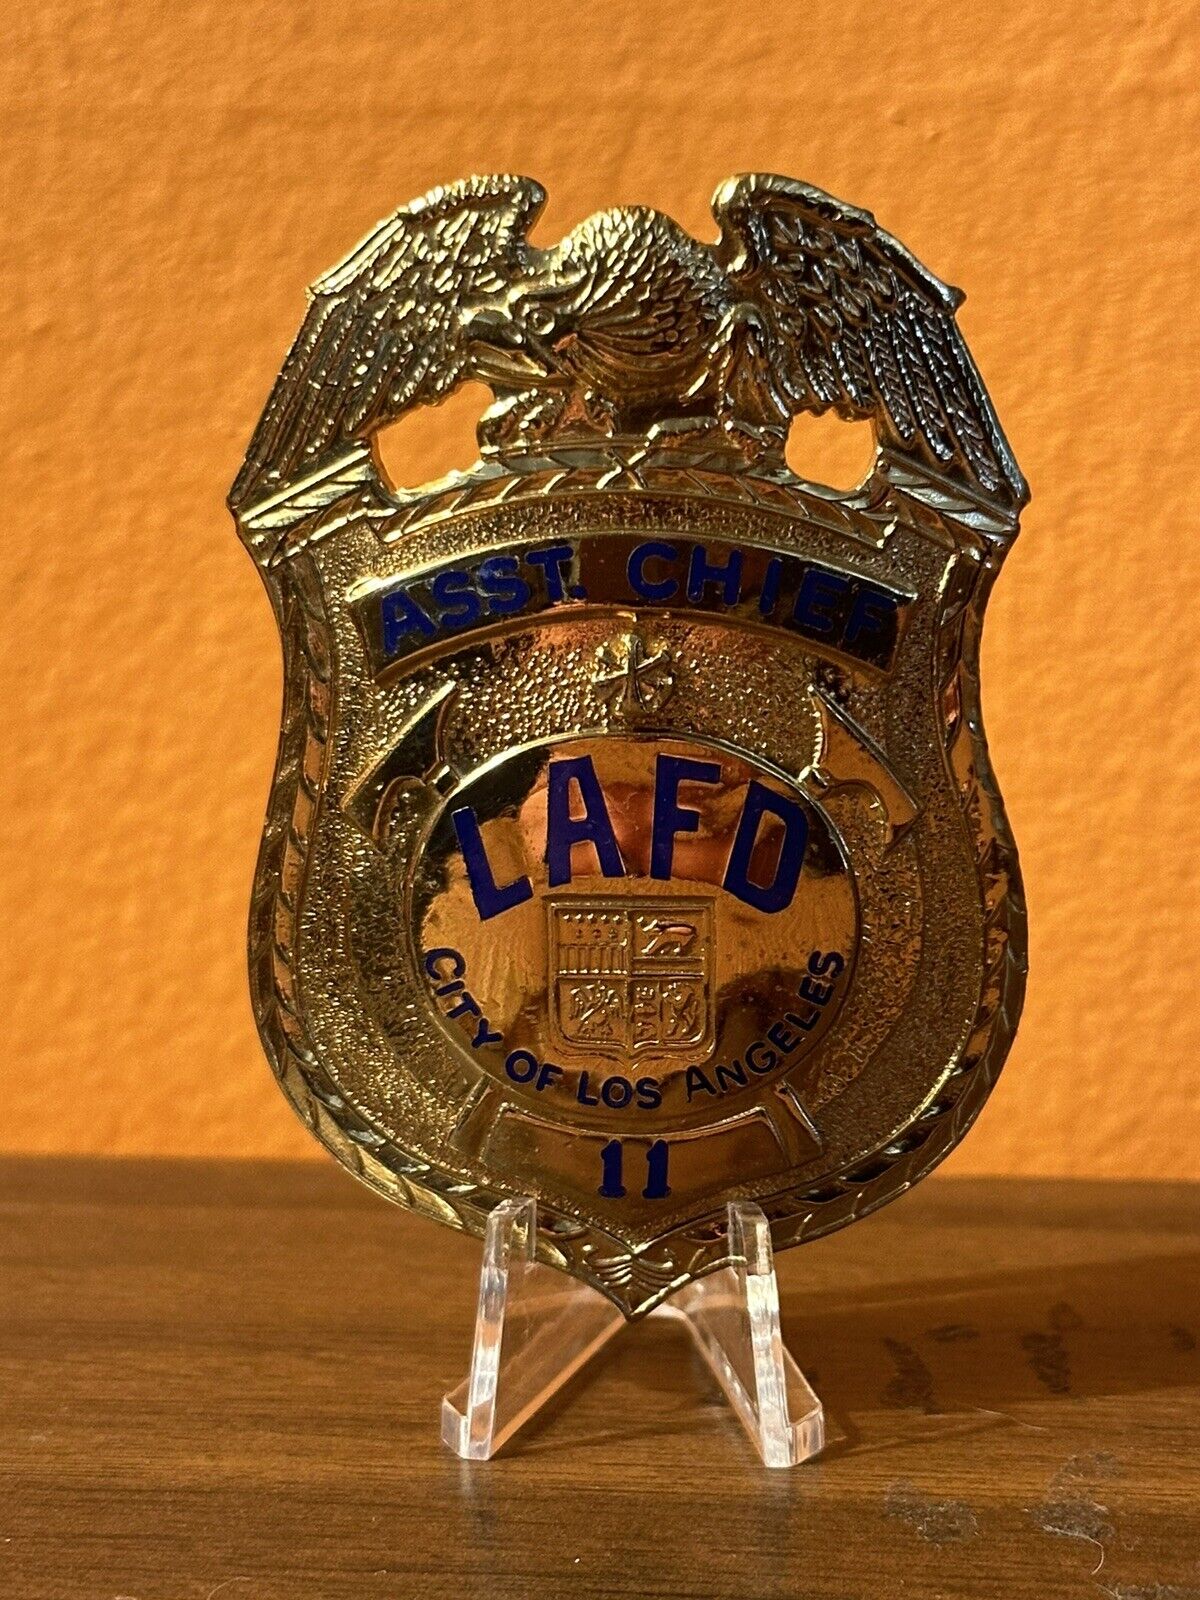 Los Angeles Fire Dept Badge (Obsolete)